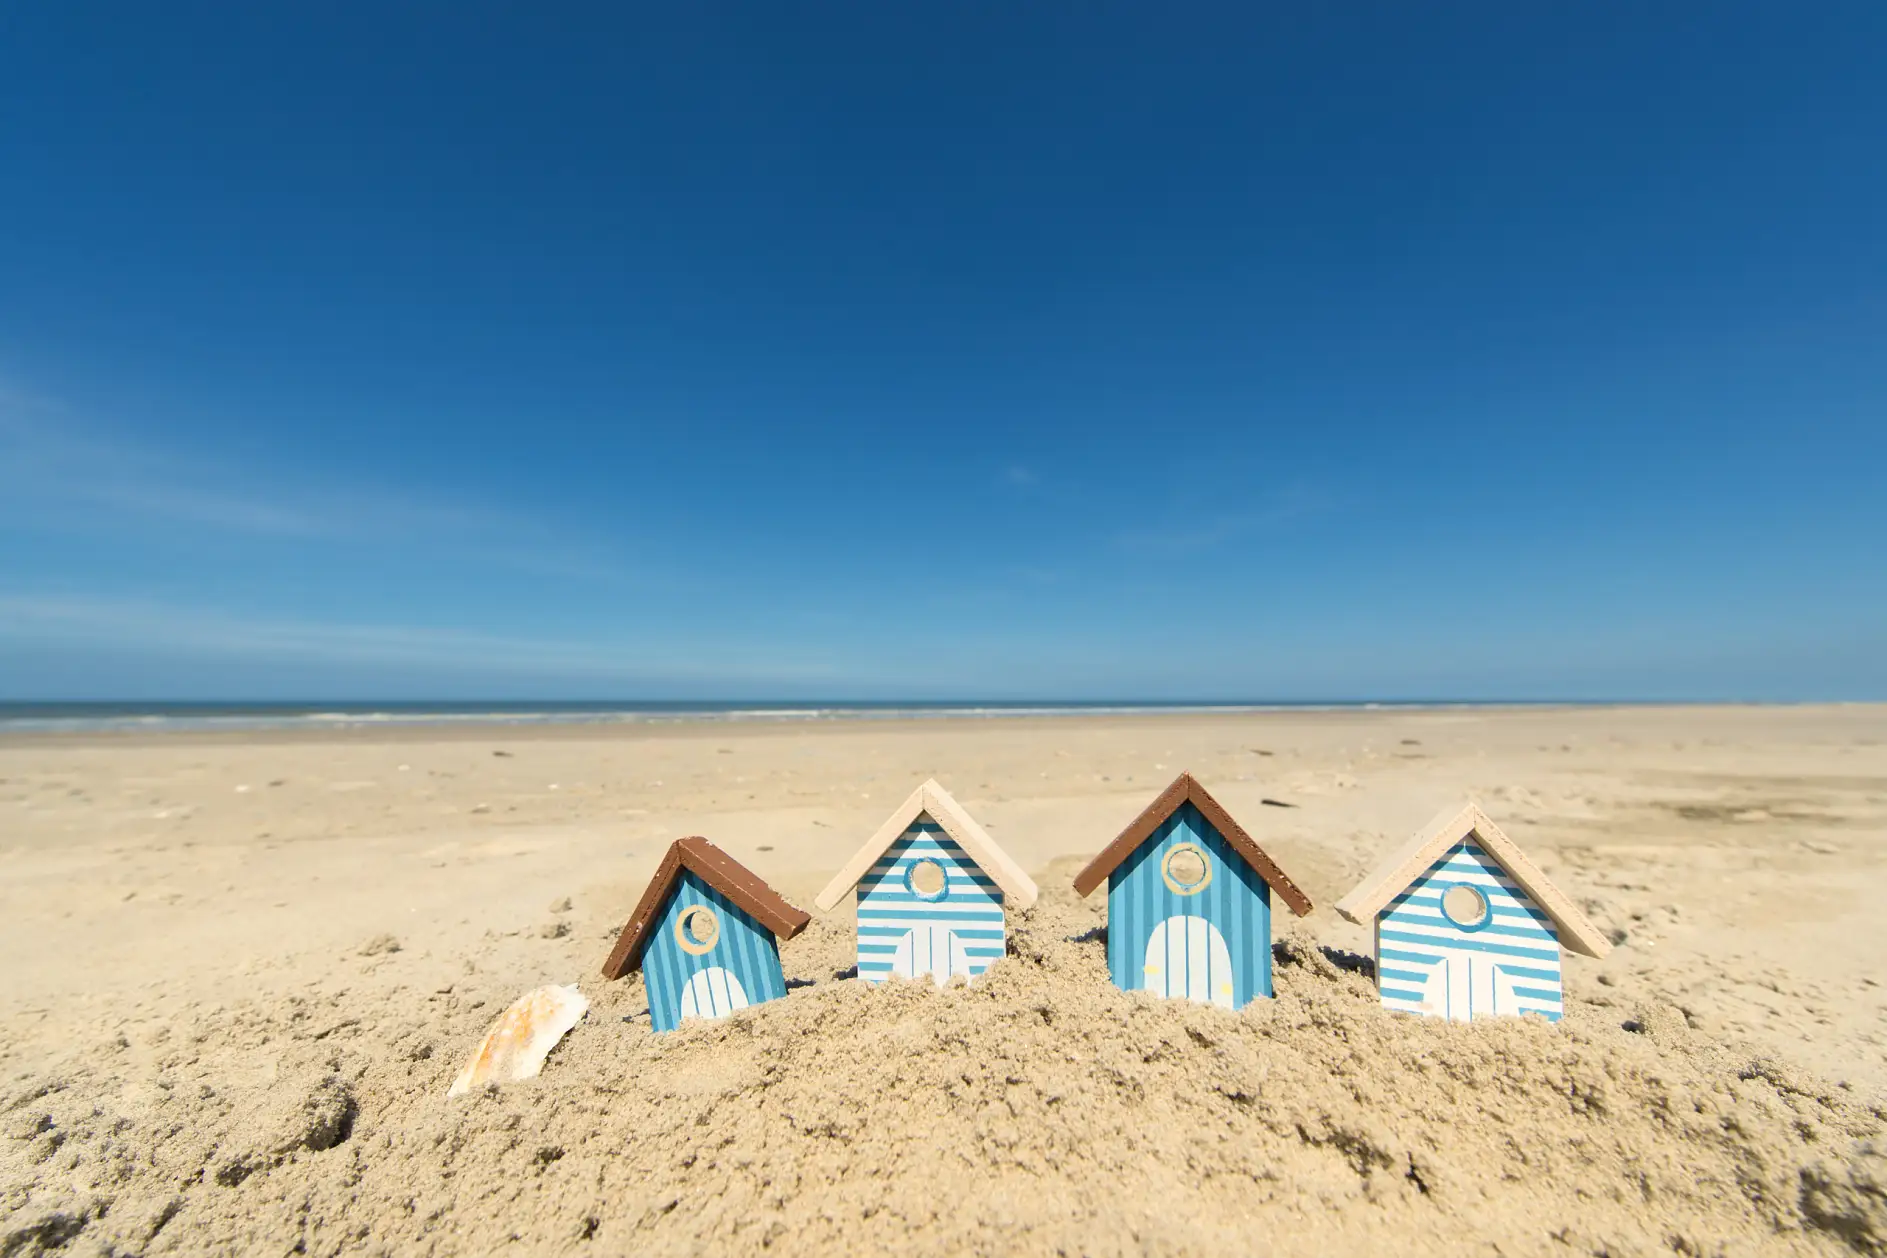 Mini domki na plaży